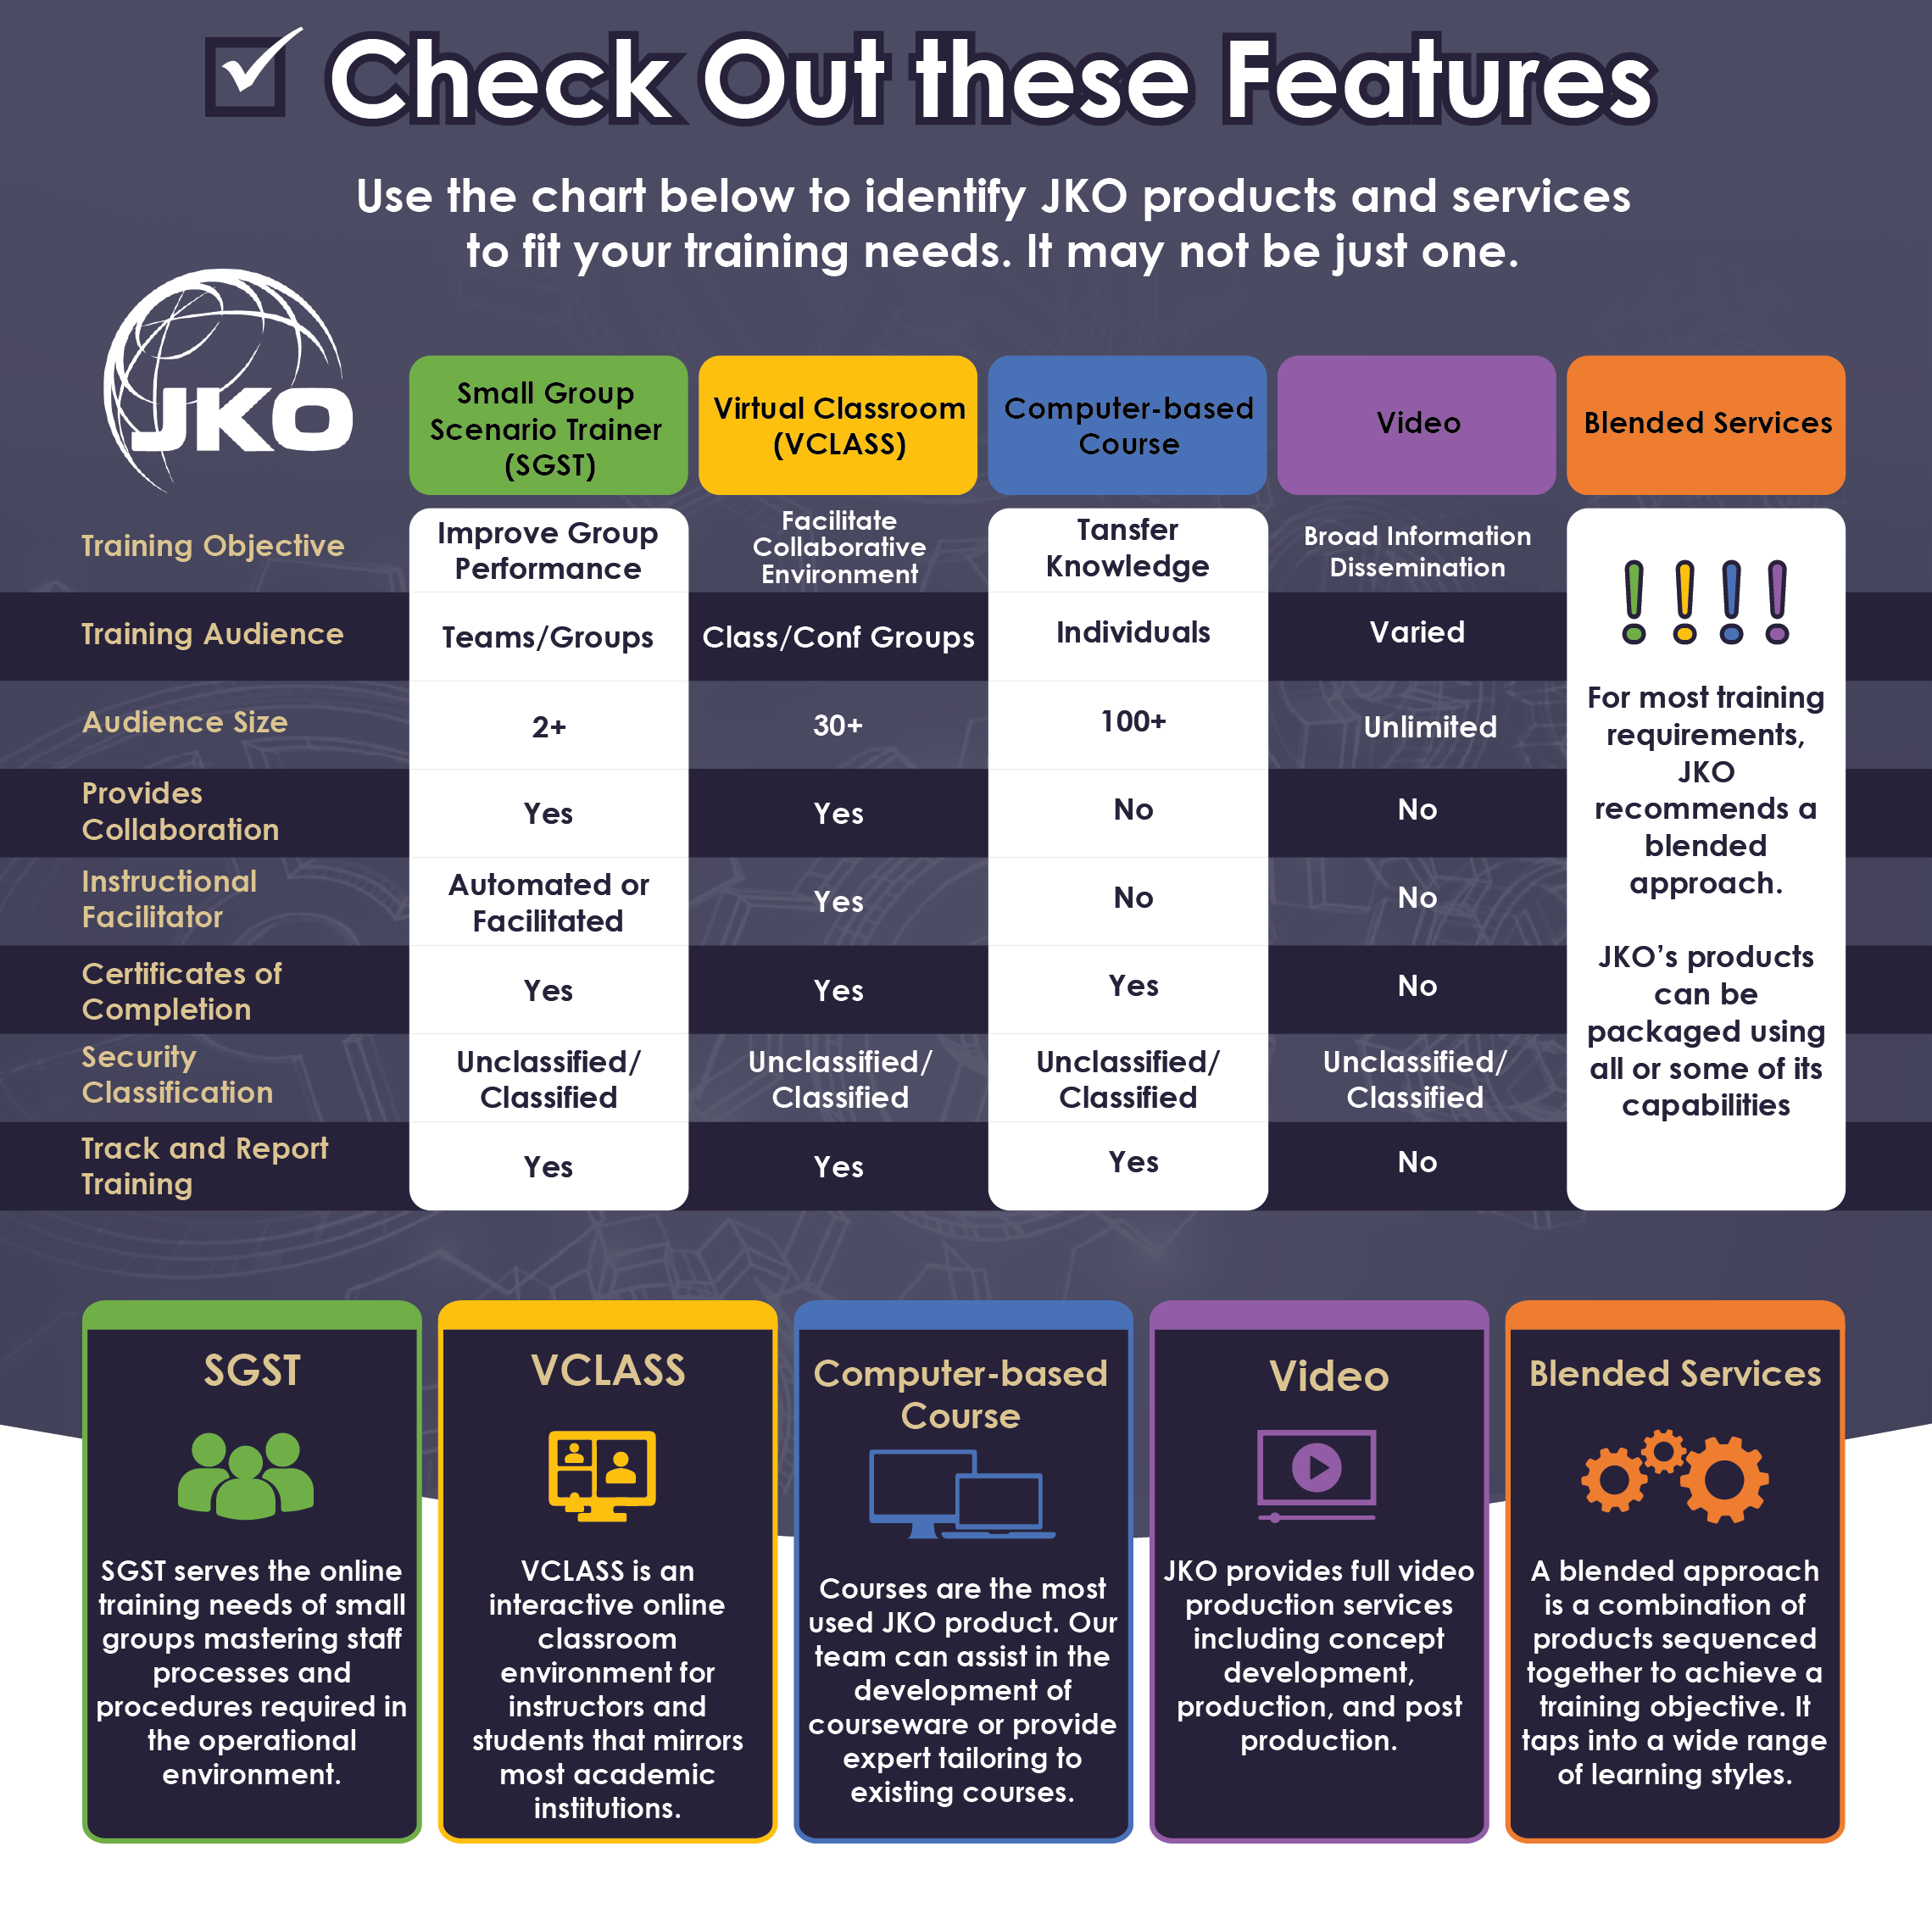 Features of JKO training tools